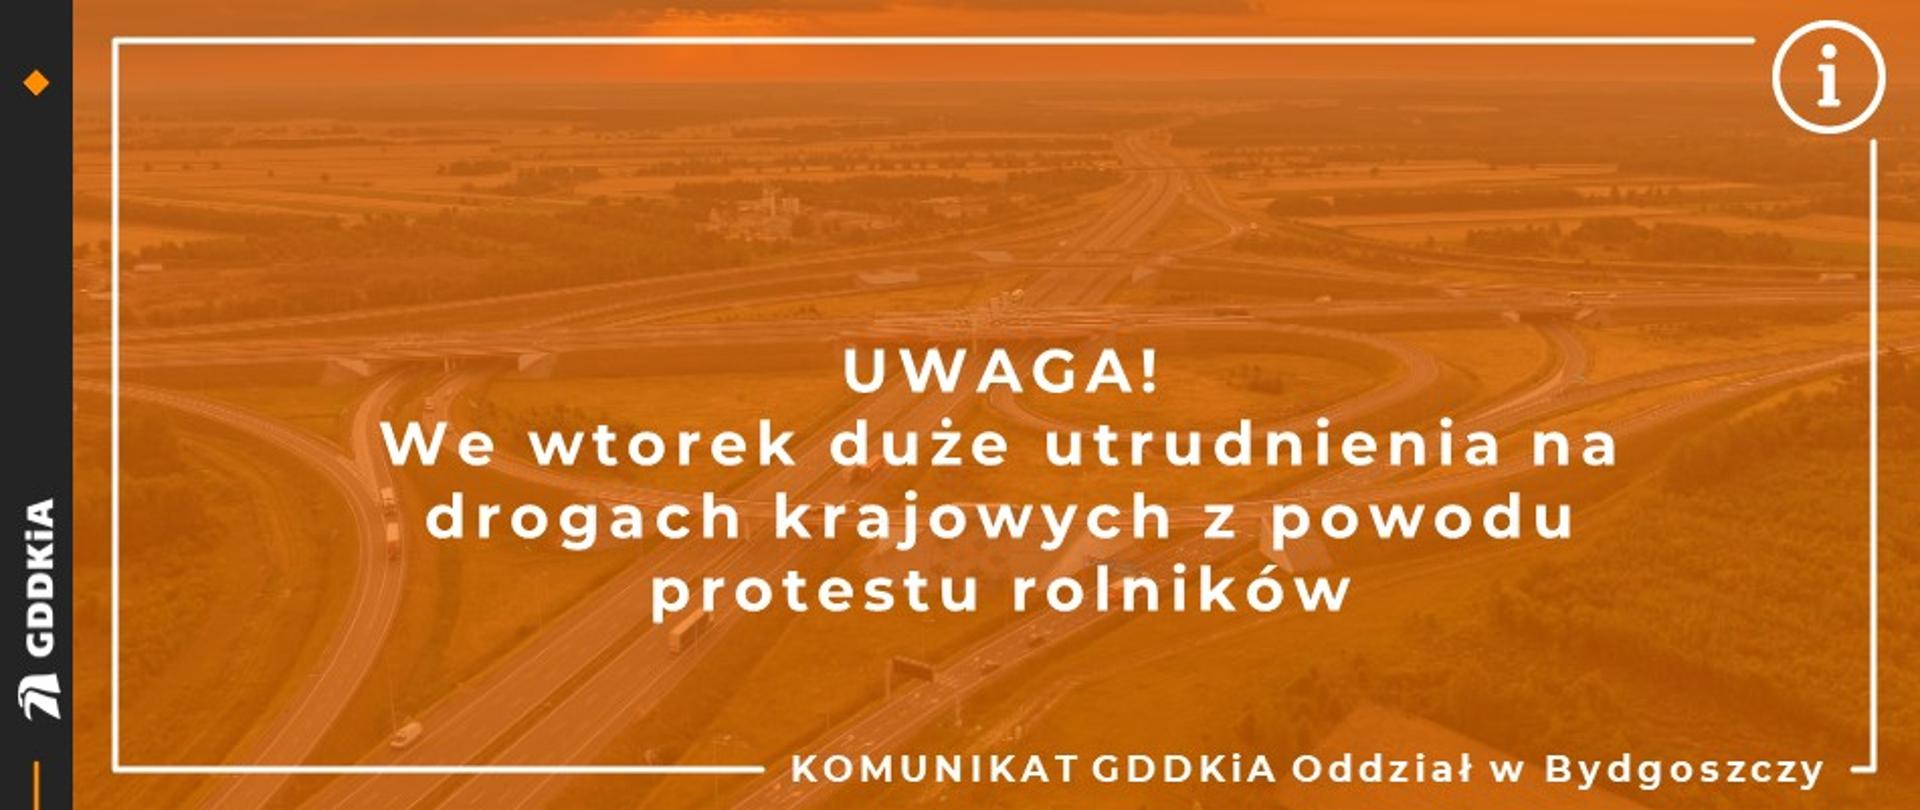 Komunikat GDDKiA protest rolnicy